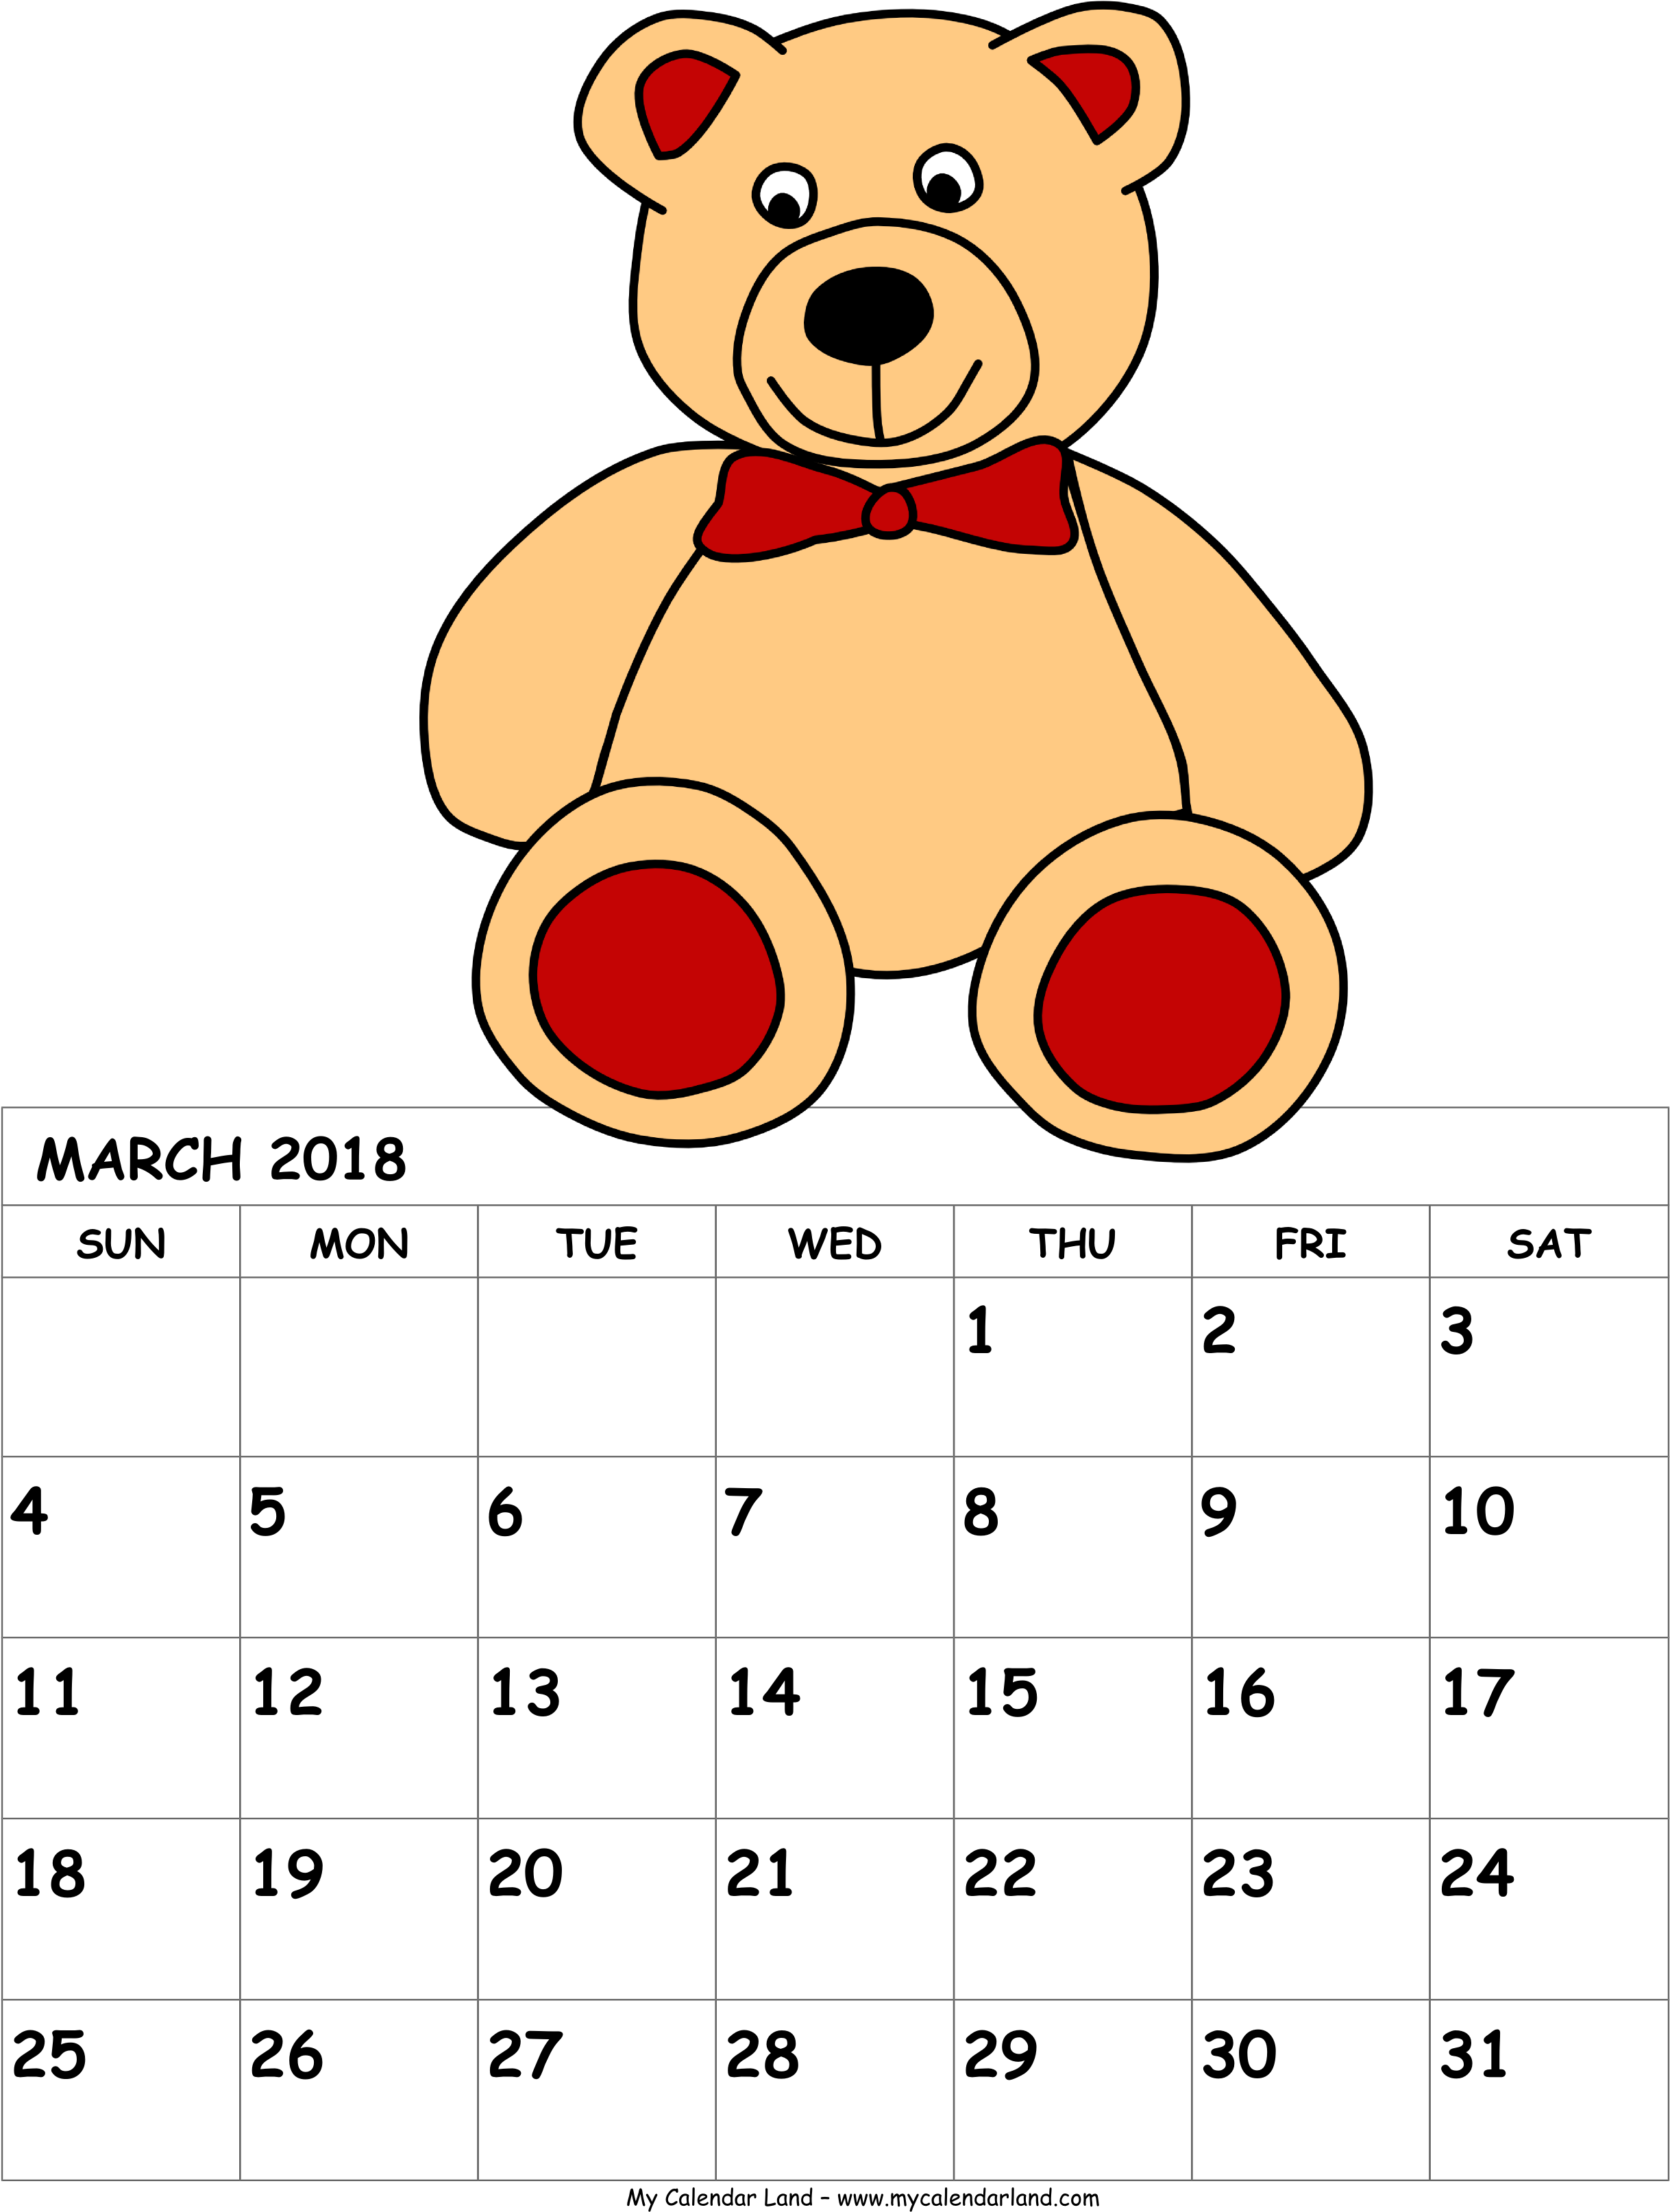 March2018 Teddy Bear Calendar Clipart PNG image